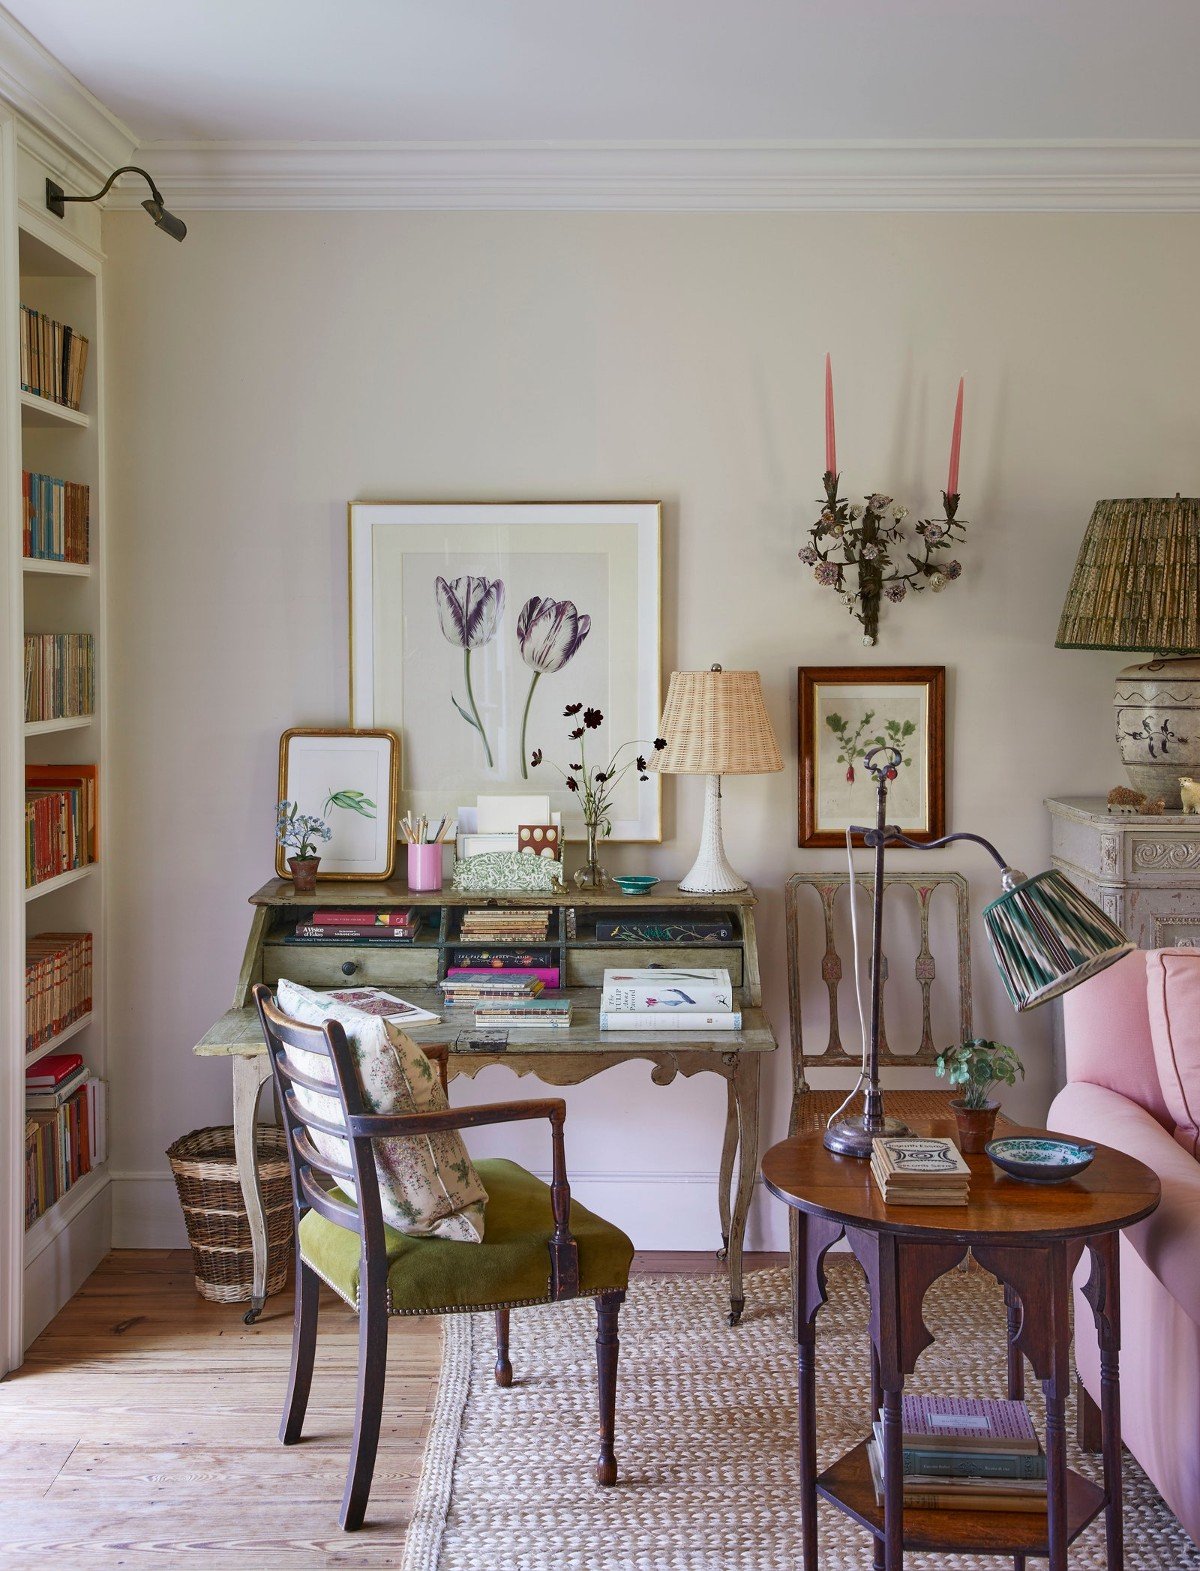 Décor Inspiration | At Home With - Deborah Needleman, Hudson Valley